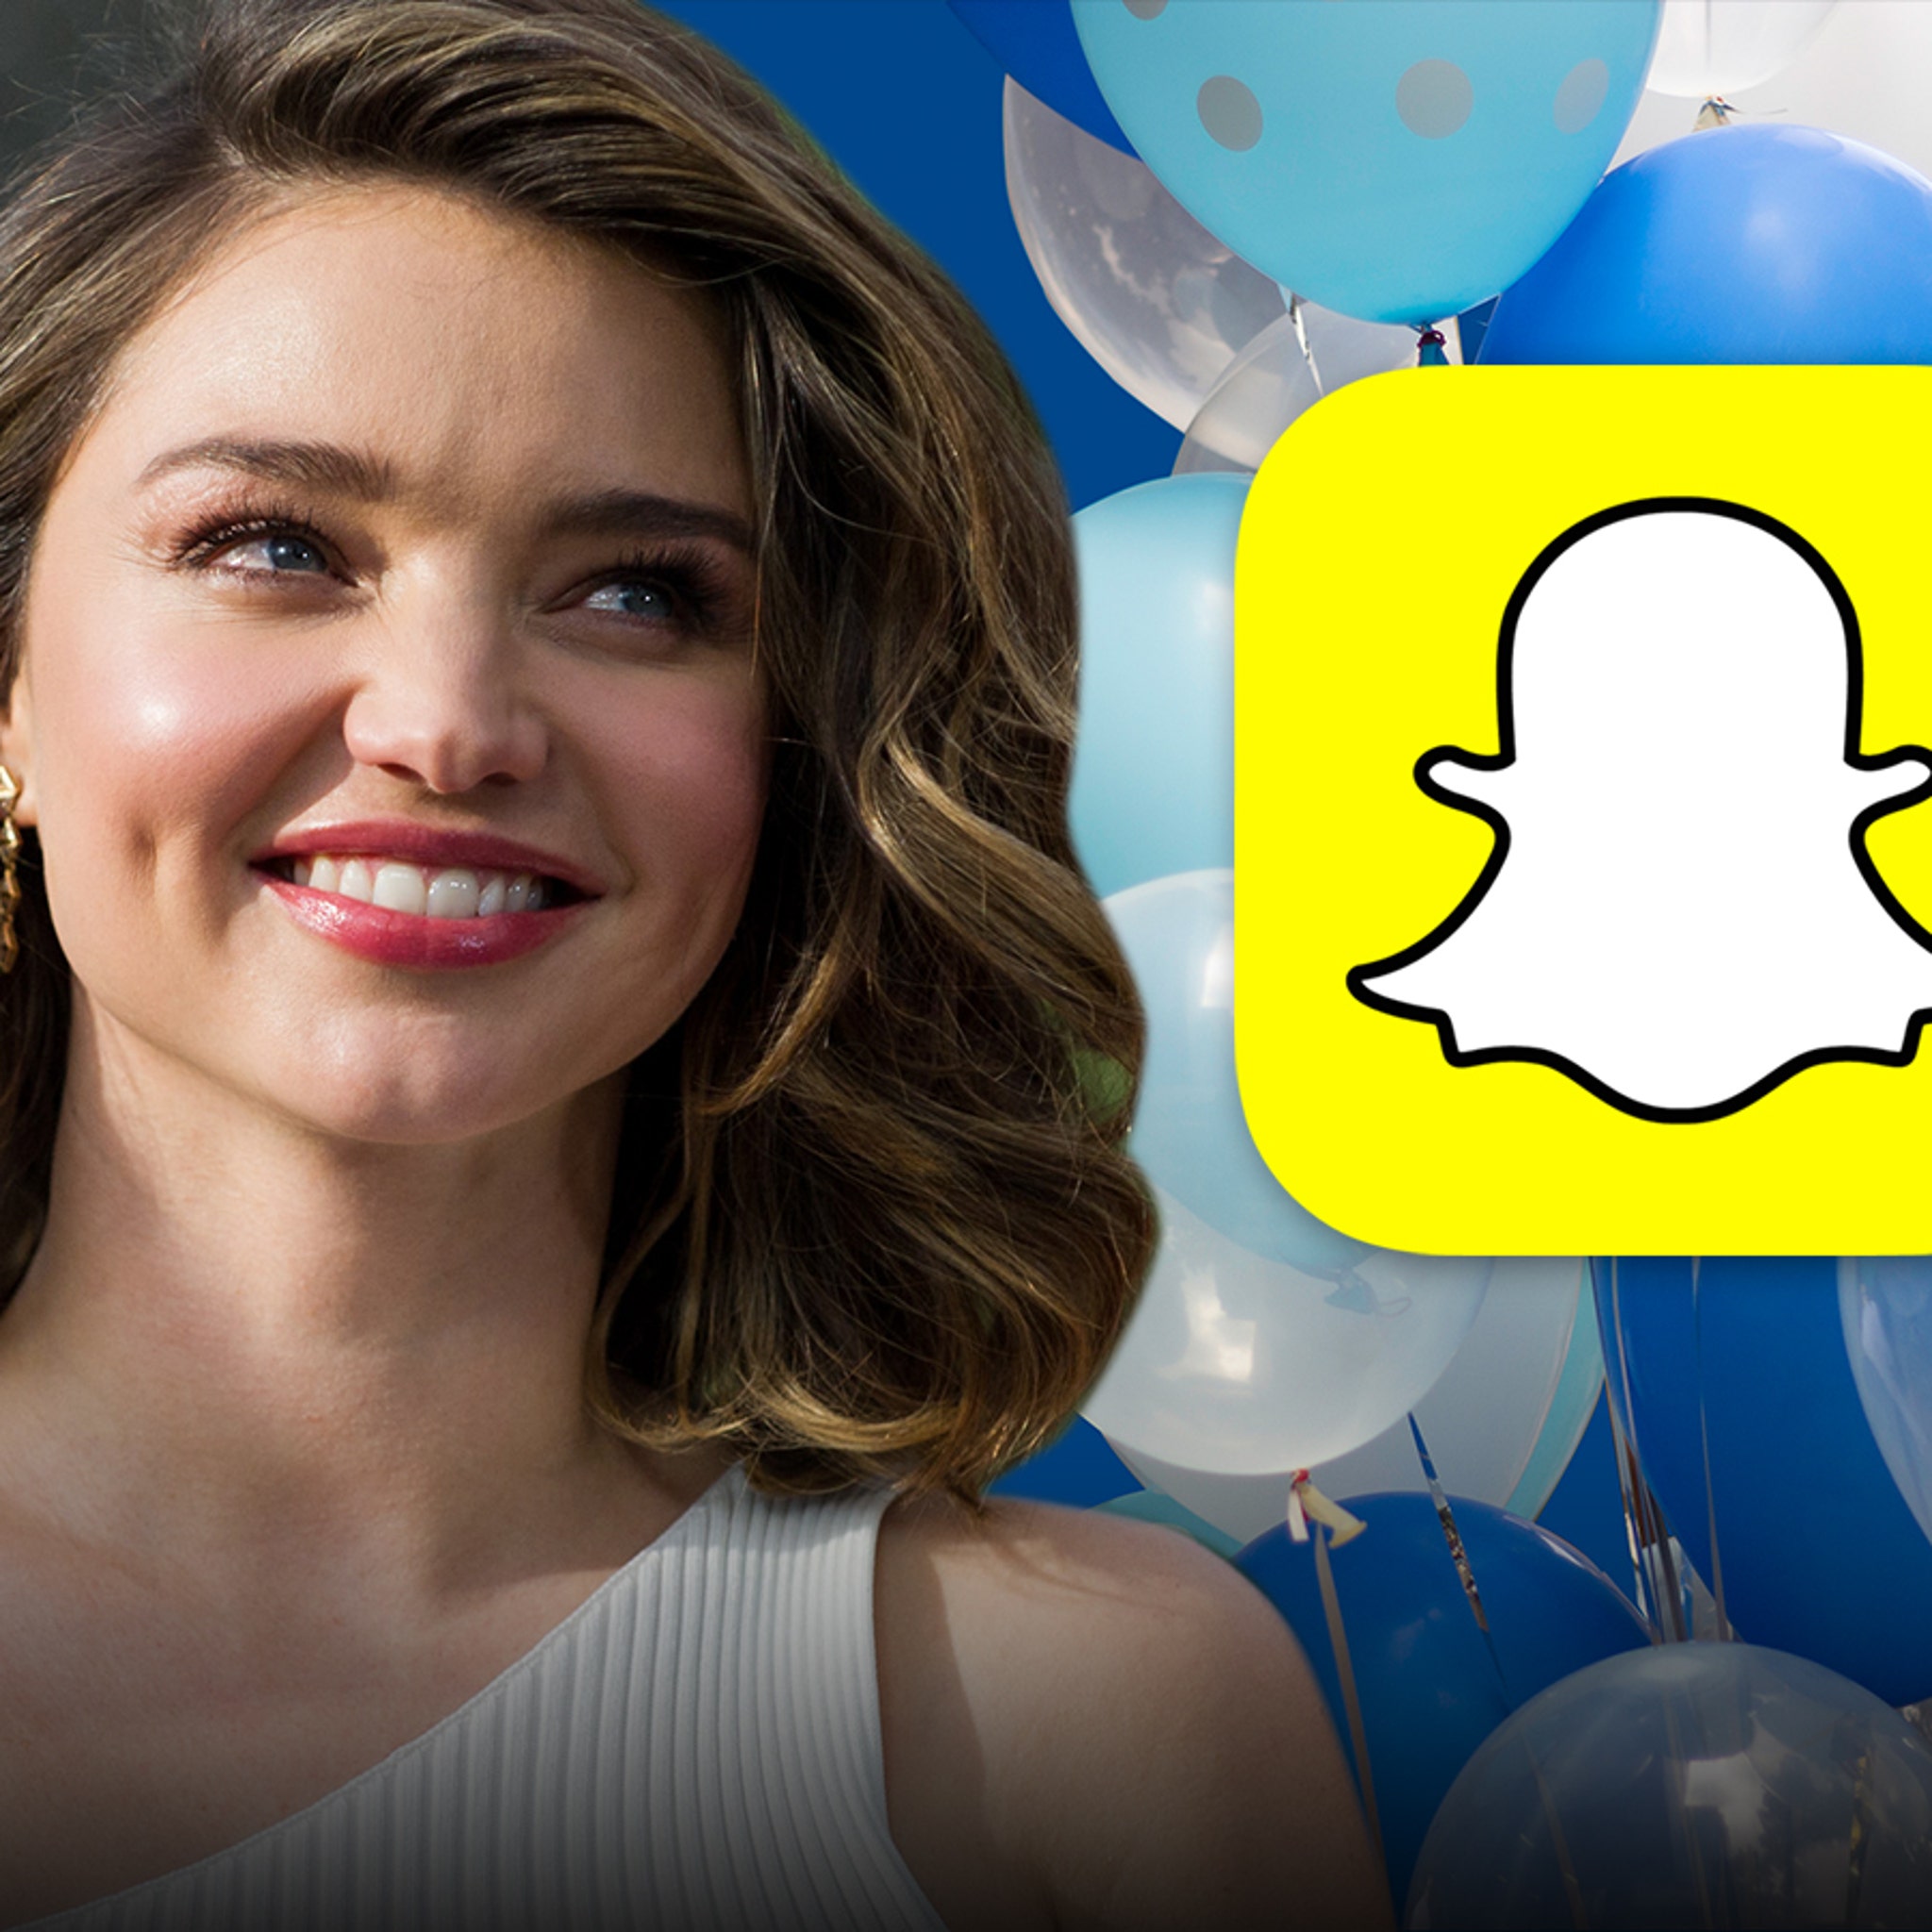 Miranda Kerr Uses Husband's Snapchat to Announce Baby #4